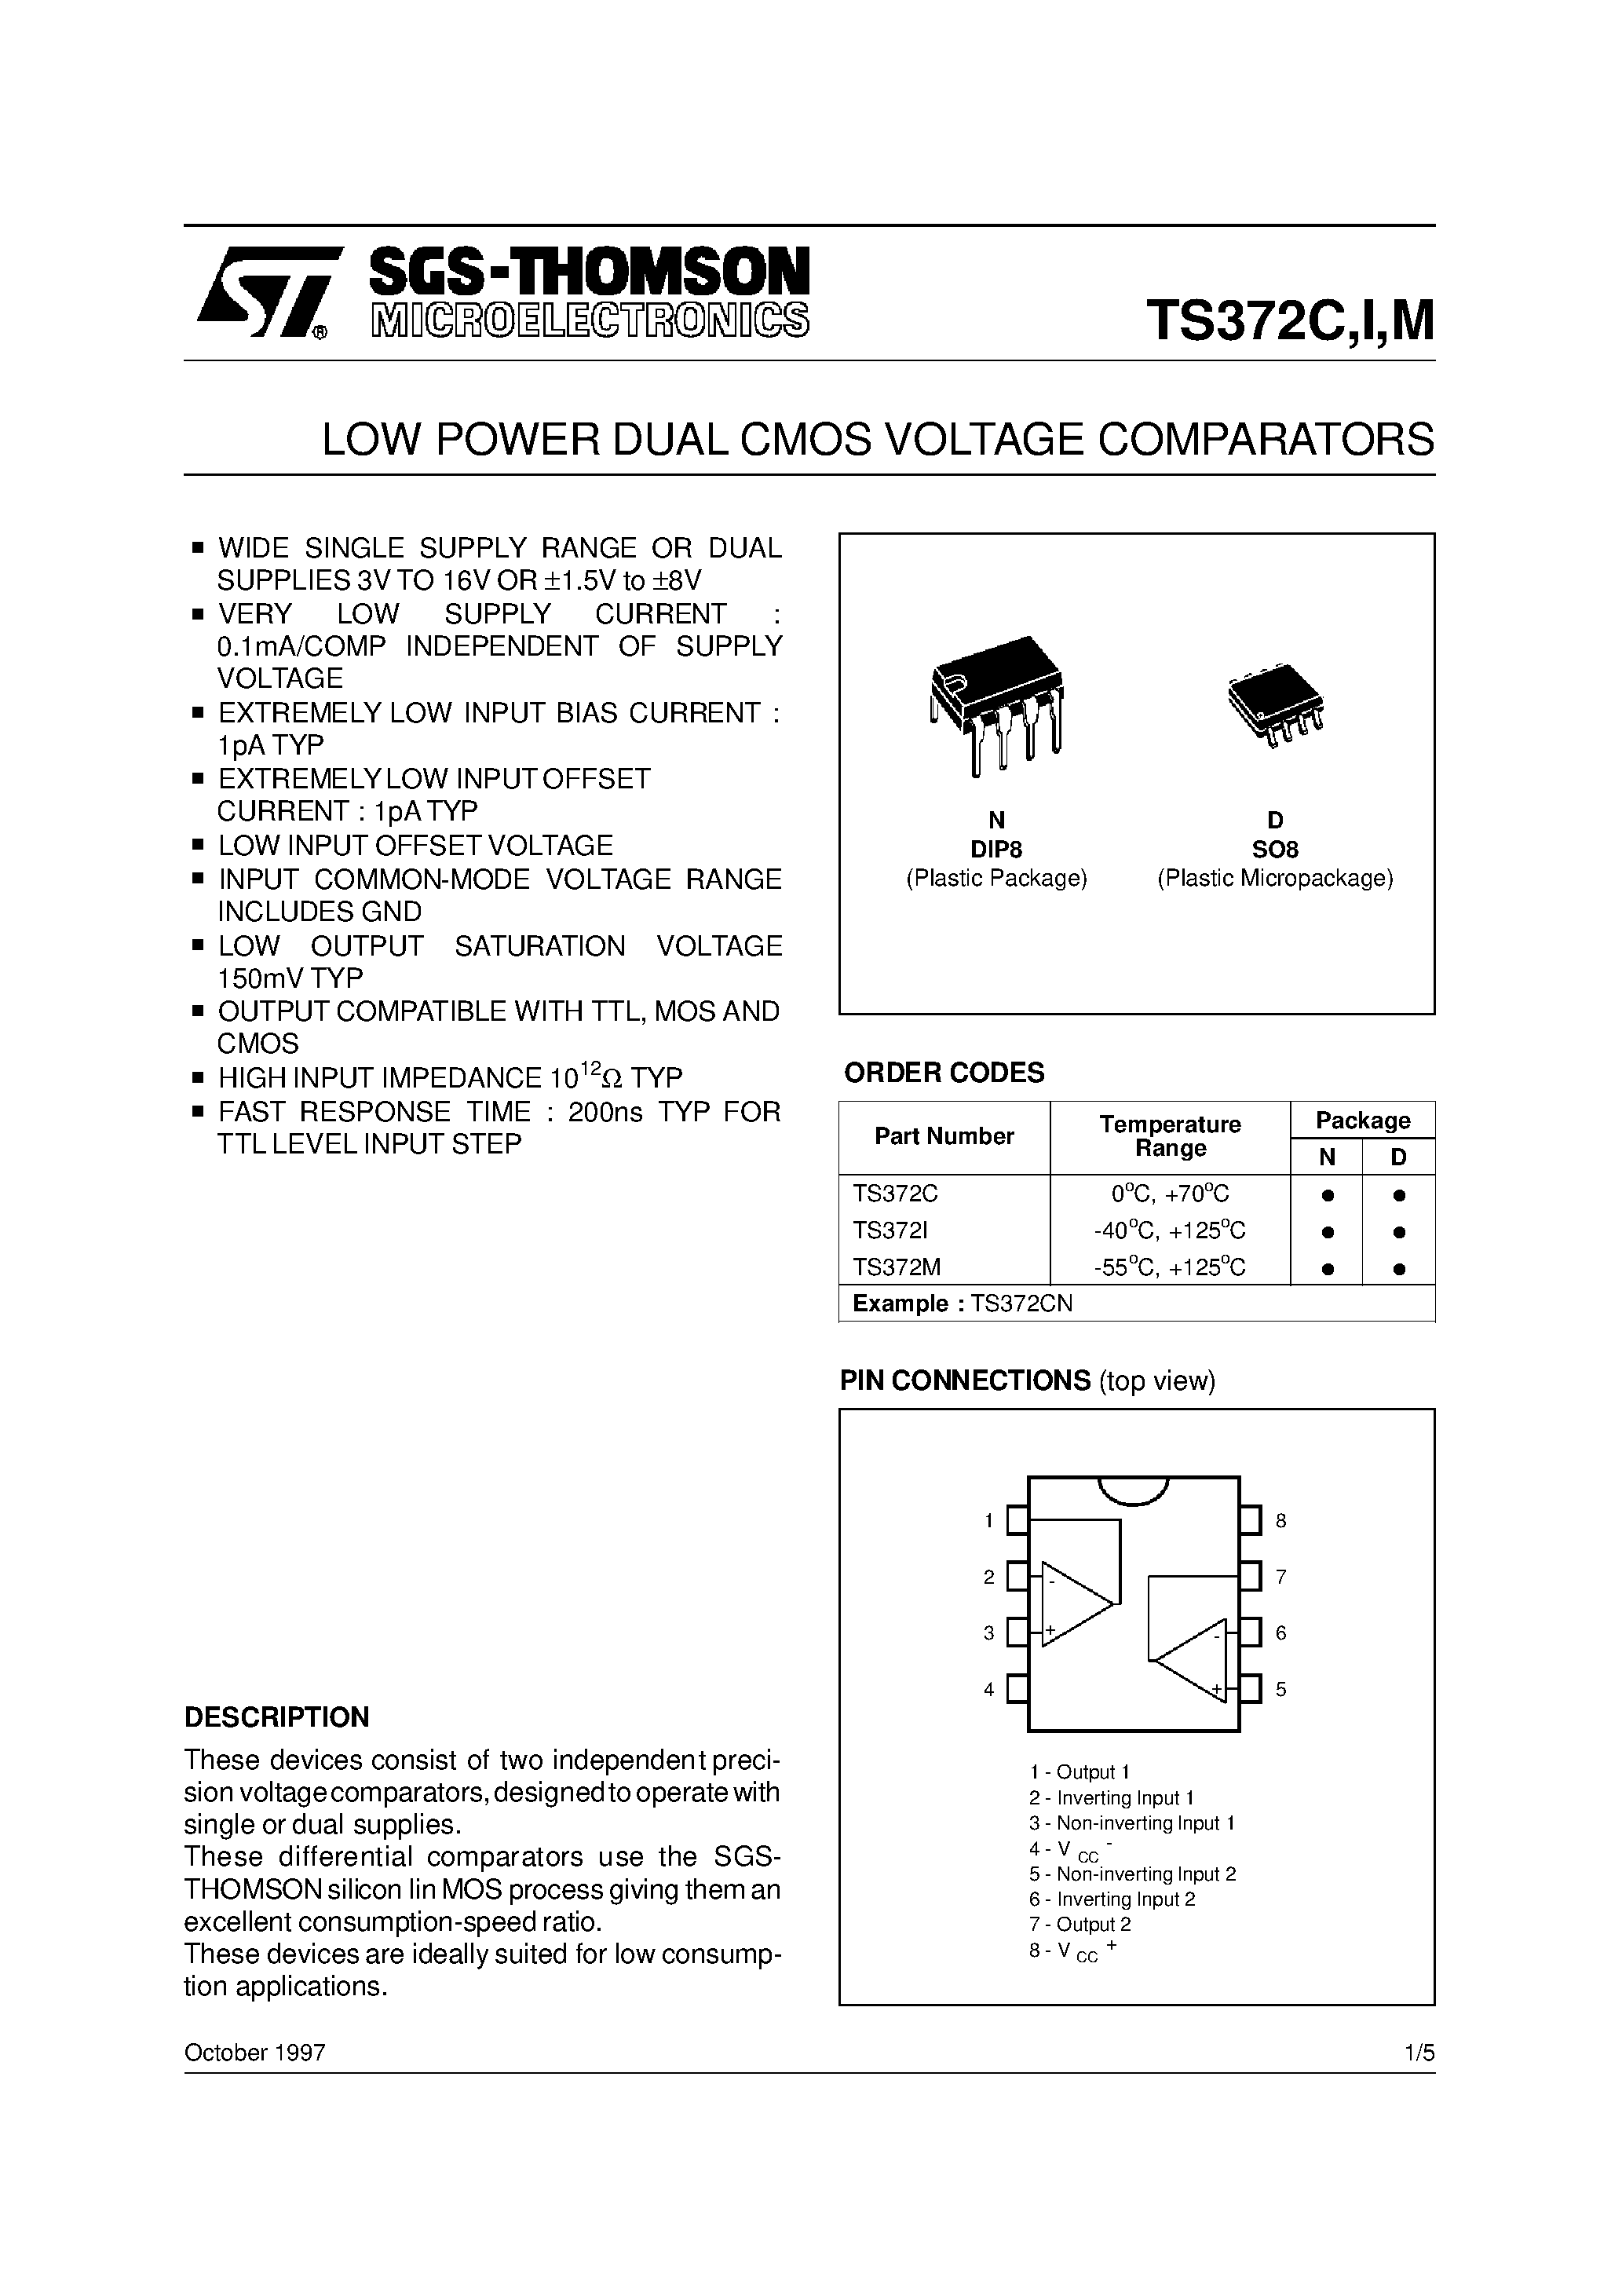 Даташит TS372I - LOW POWER DUAL CMOS VOLTAGE COMPARATORS страница 1